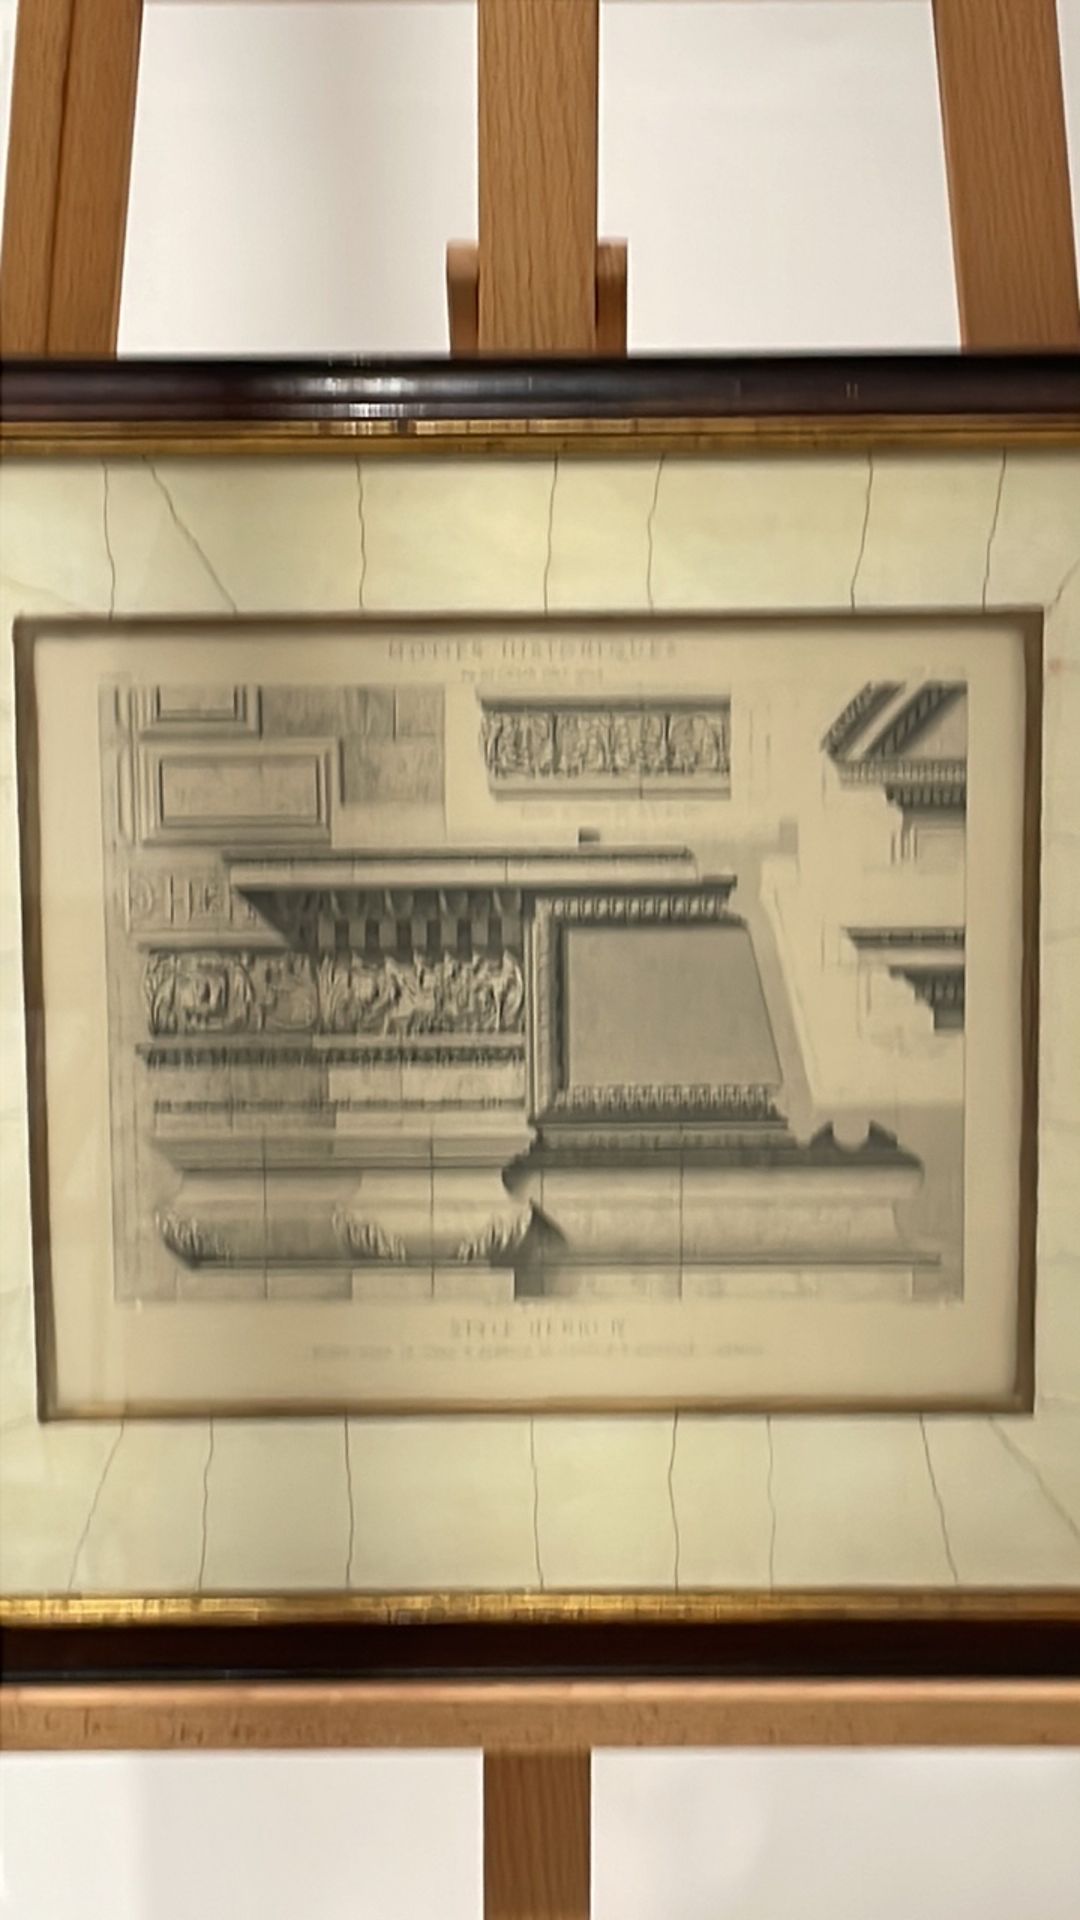 Artwork Print From Claridge's Hotel - Image 2 of 2